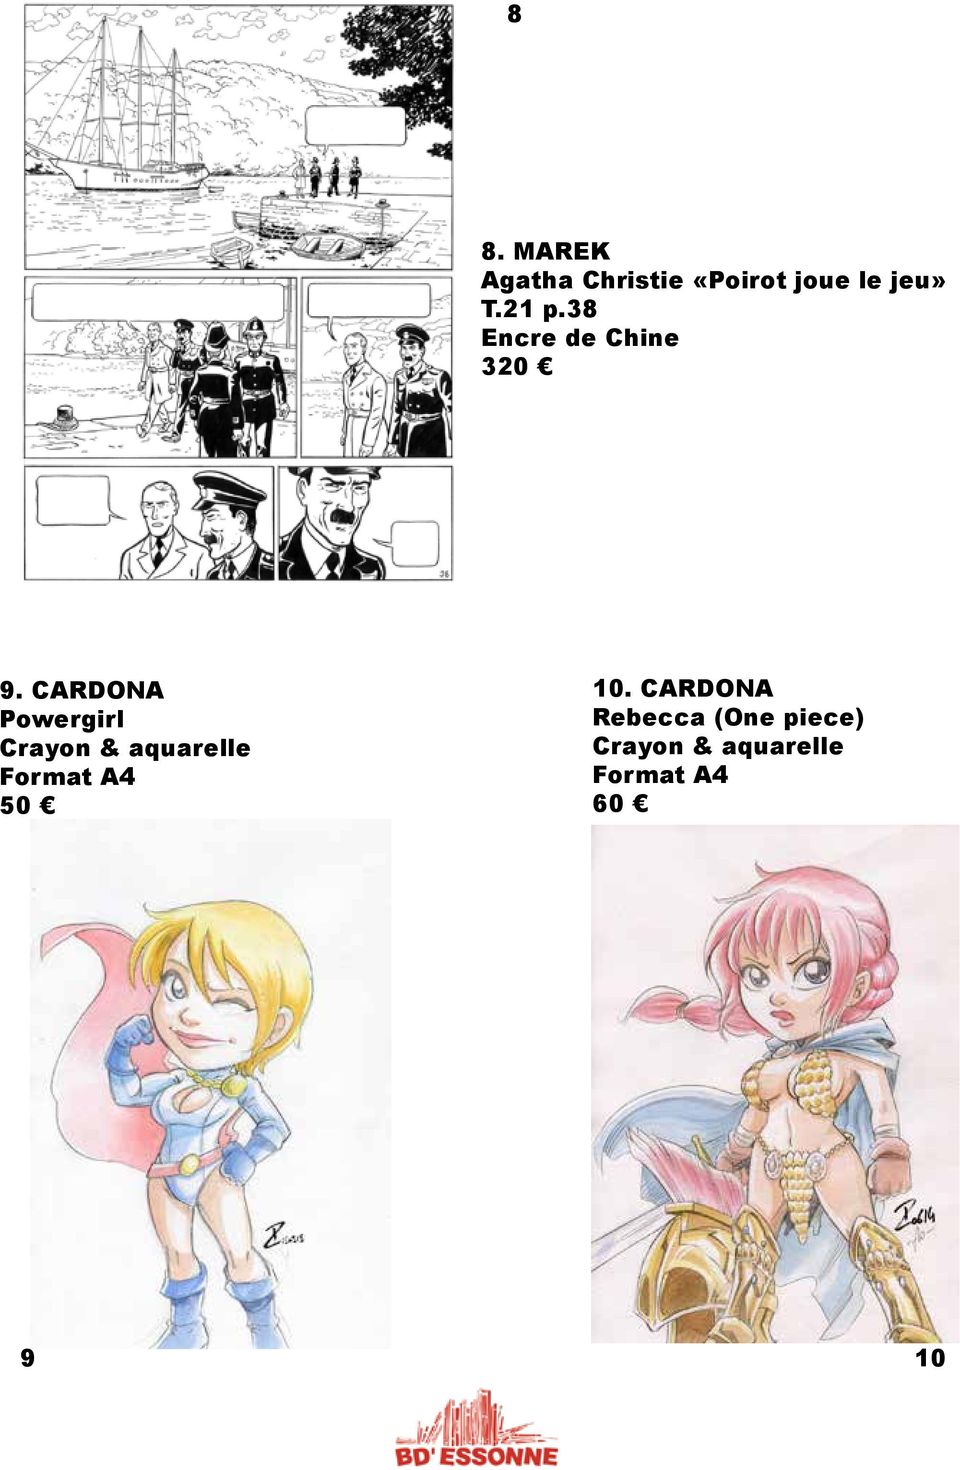 CARDONA Powergirl Crayon & aquarelle Format A4 50